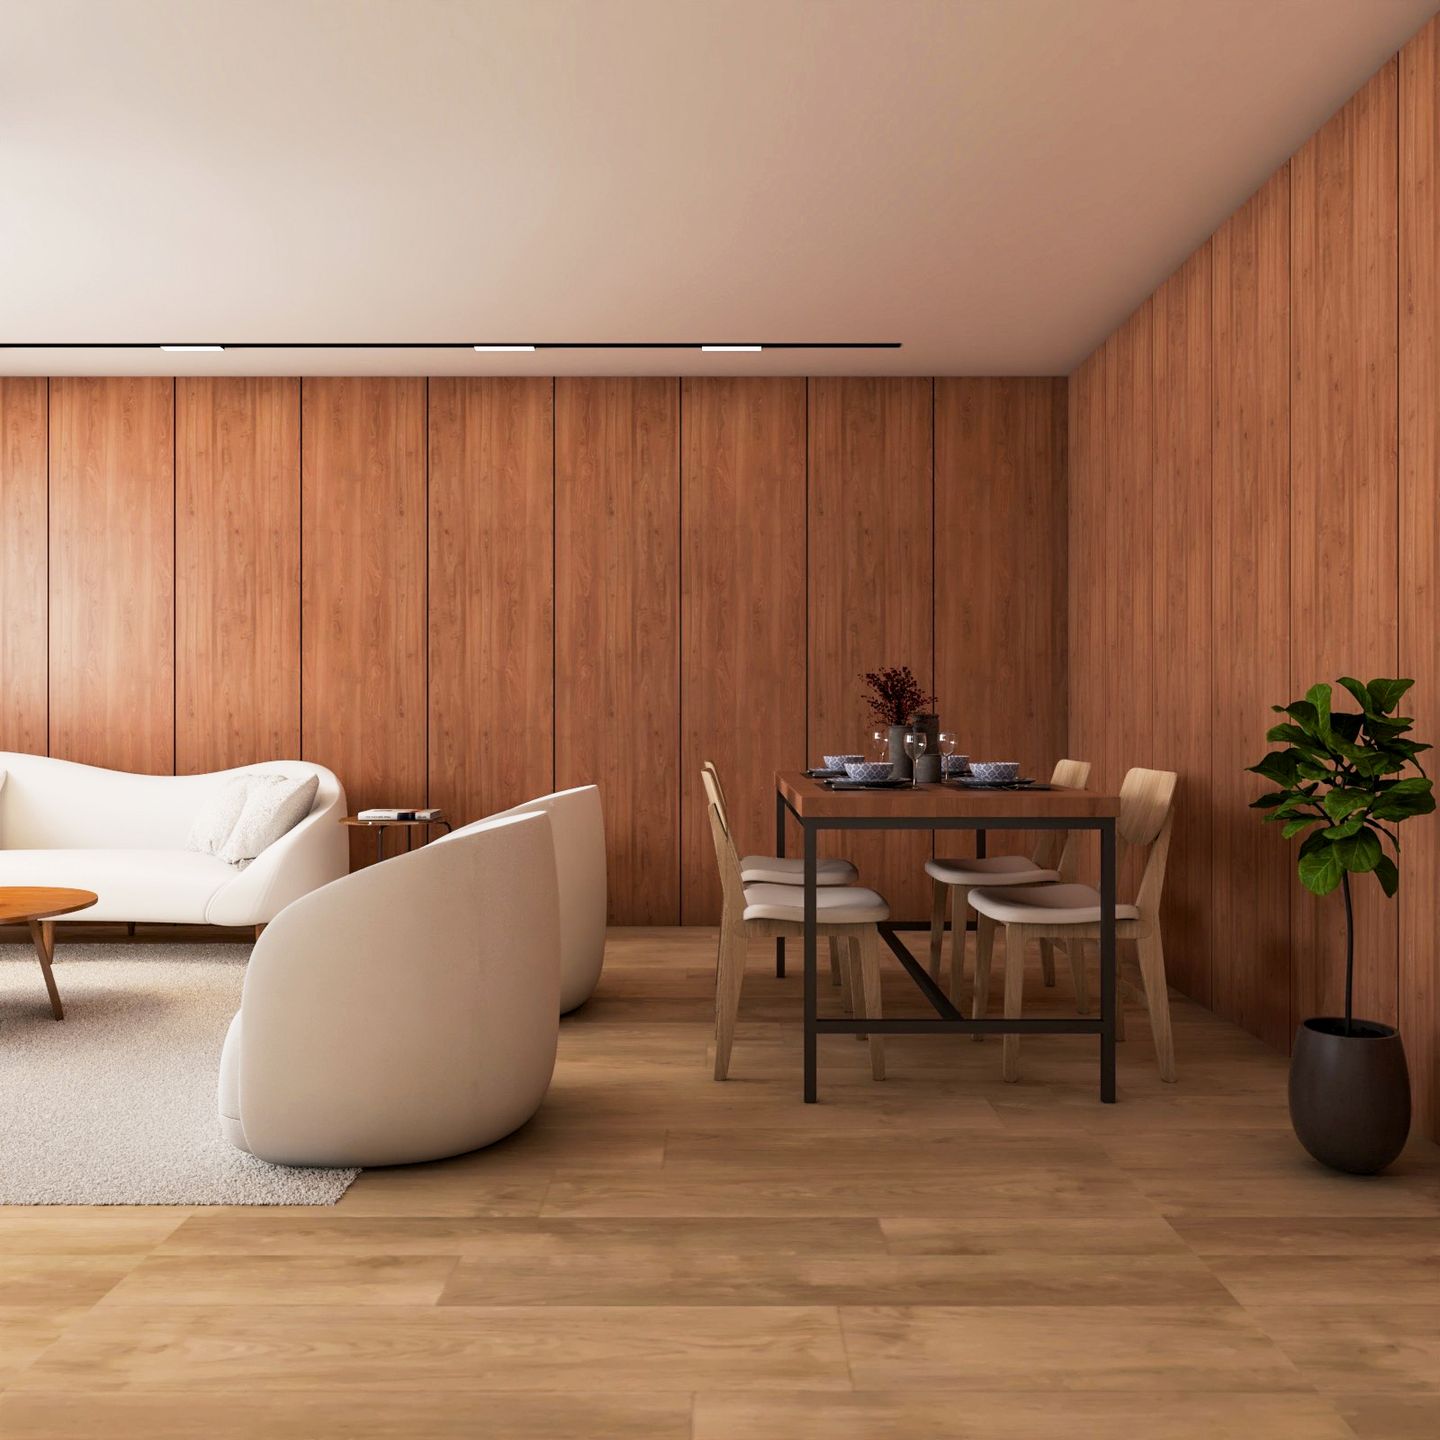 Wooden Dining Room Design For Four - Livspace